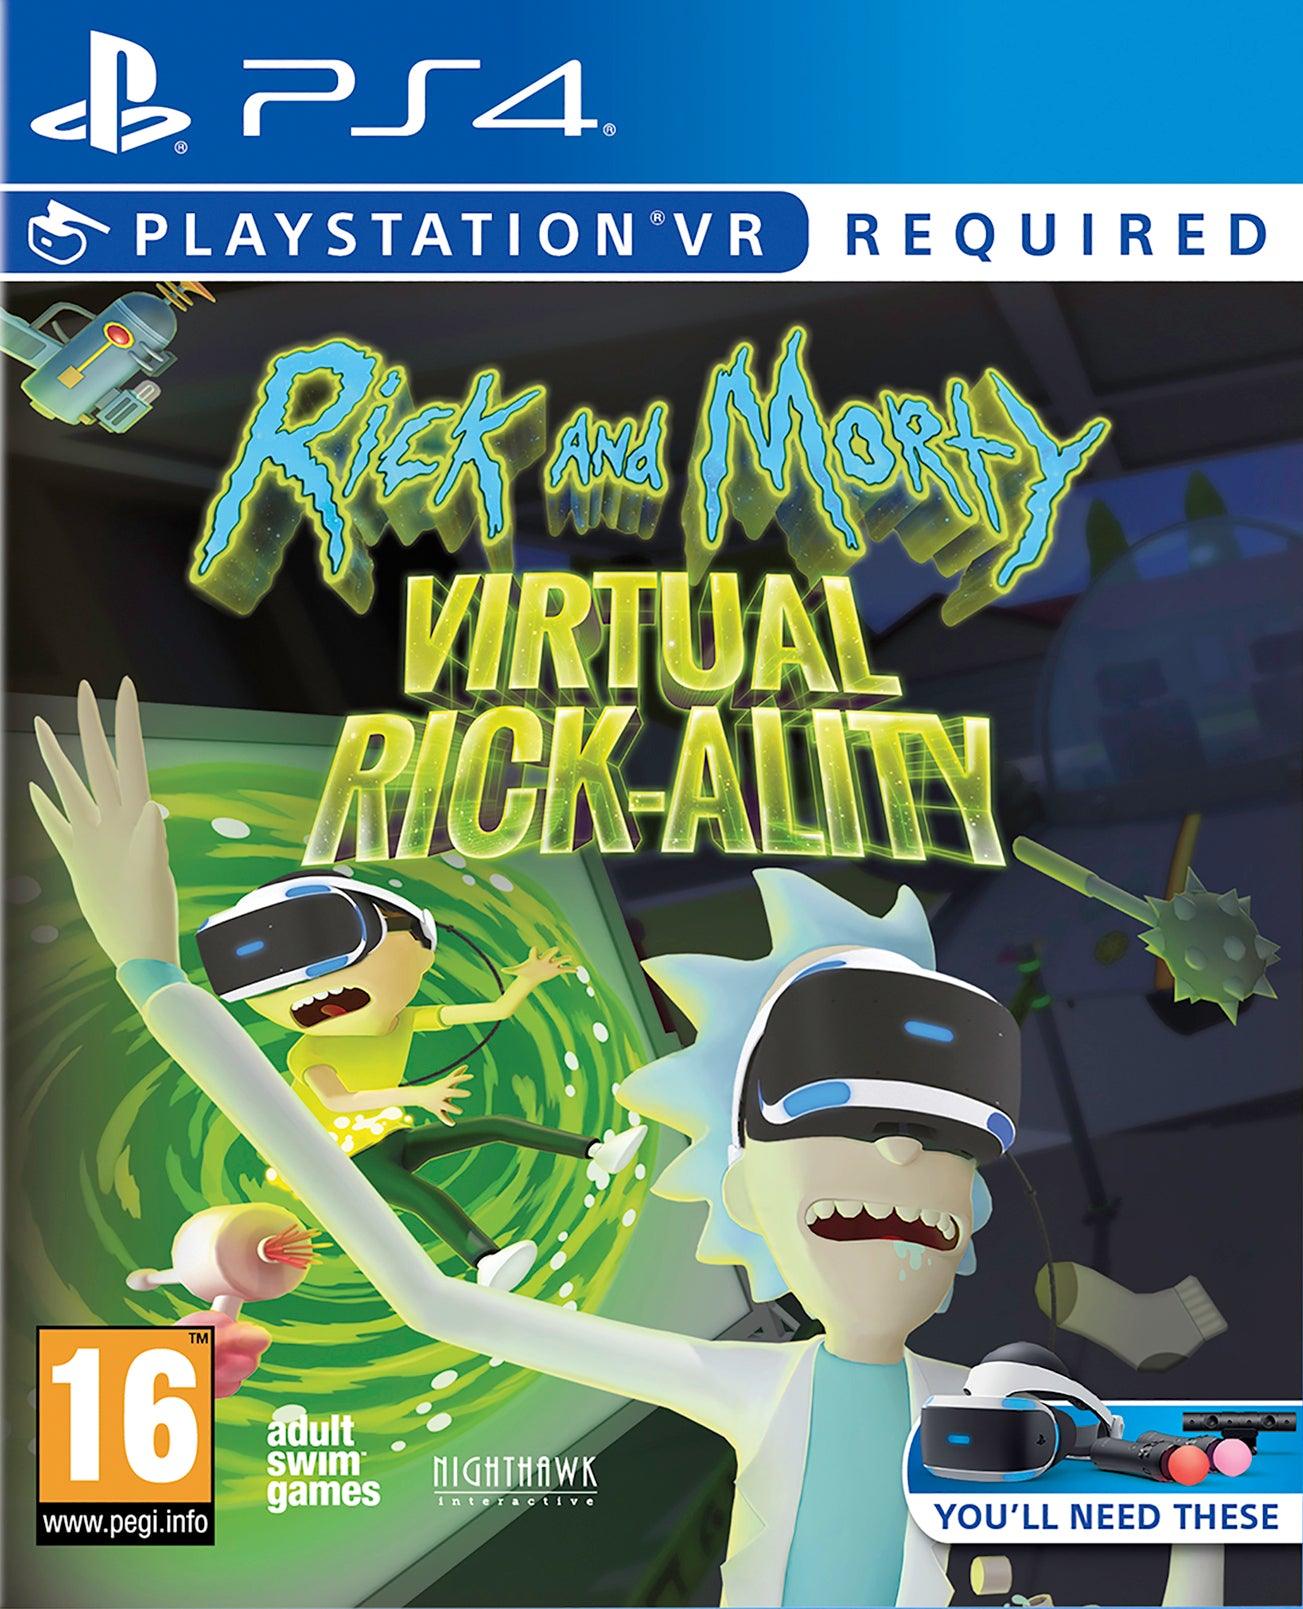 Rick And Morty Virt Rickality - Want a New Gadget